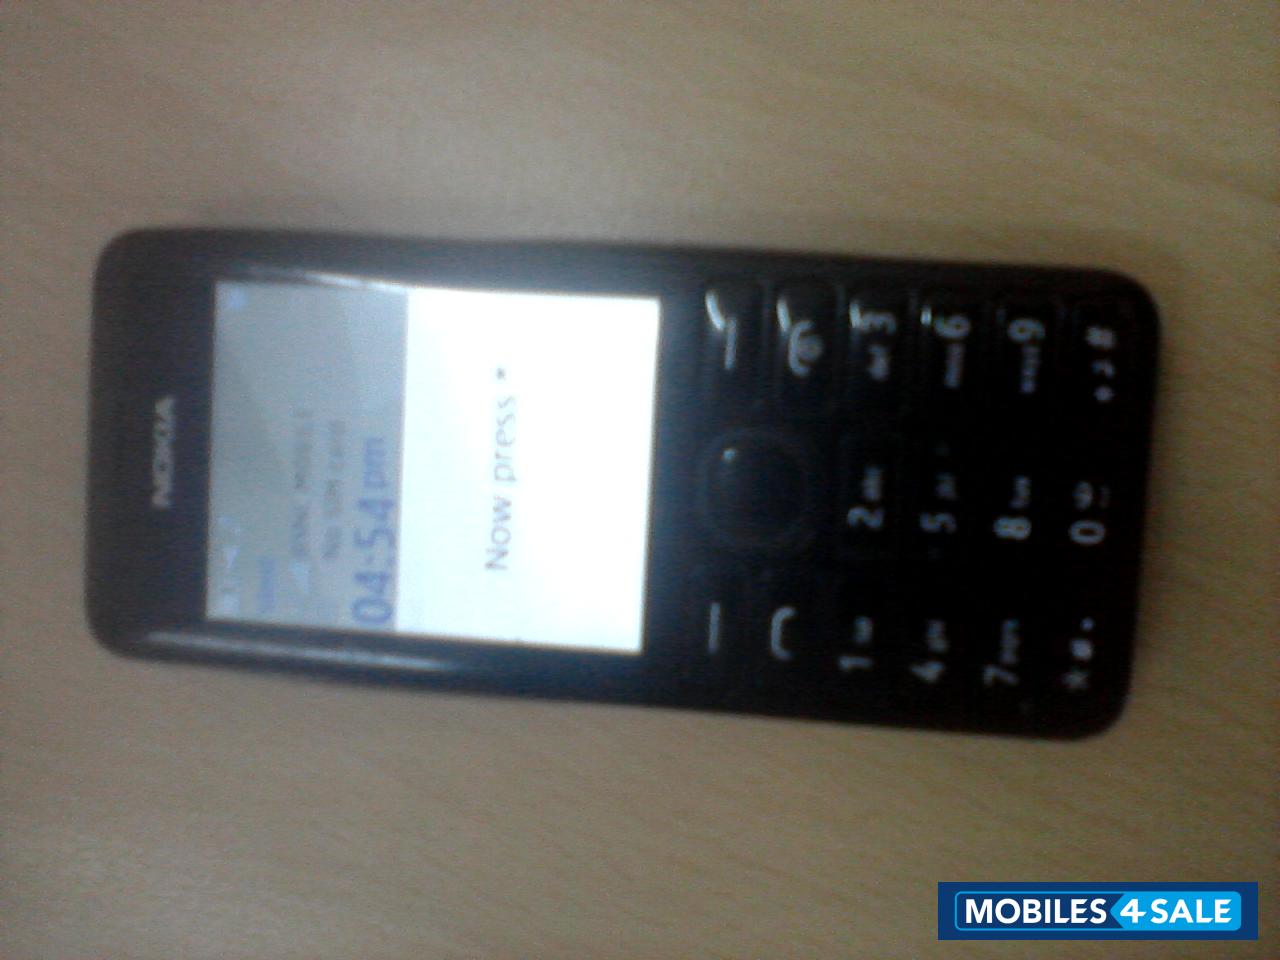 Black Nokia Asha 206